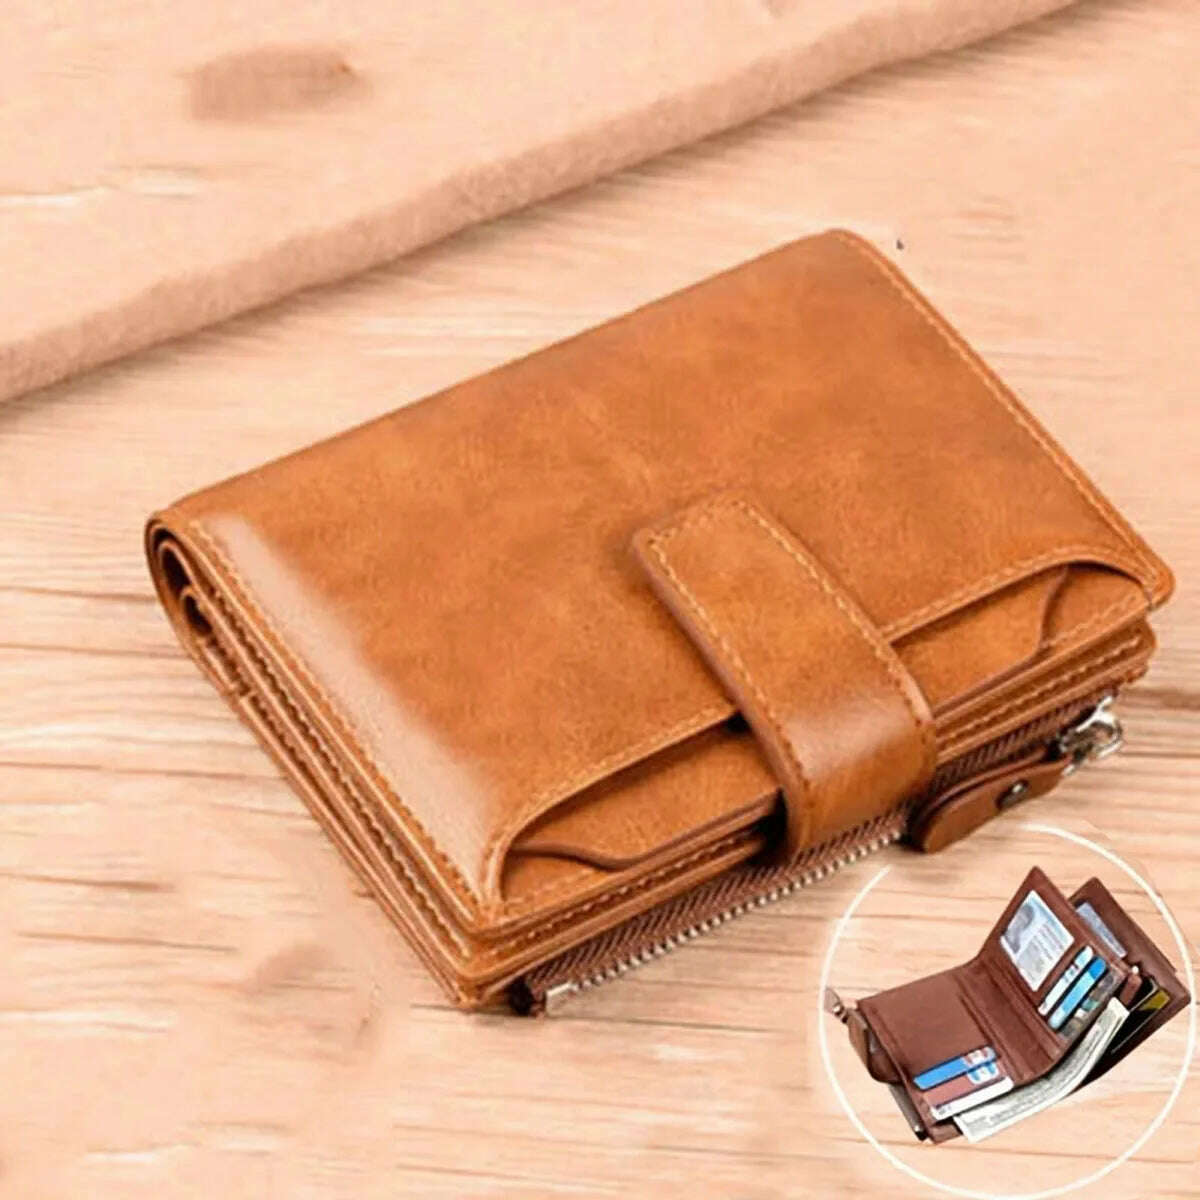 KIMLUD, Men's Coin Purse Wallet RFID Blocking Man PU Leather Wallet Zipper Business Card Holder Money Bag Wallet Male, No LOGO Khaki, KIMLUD Women's Clothes